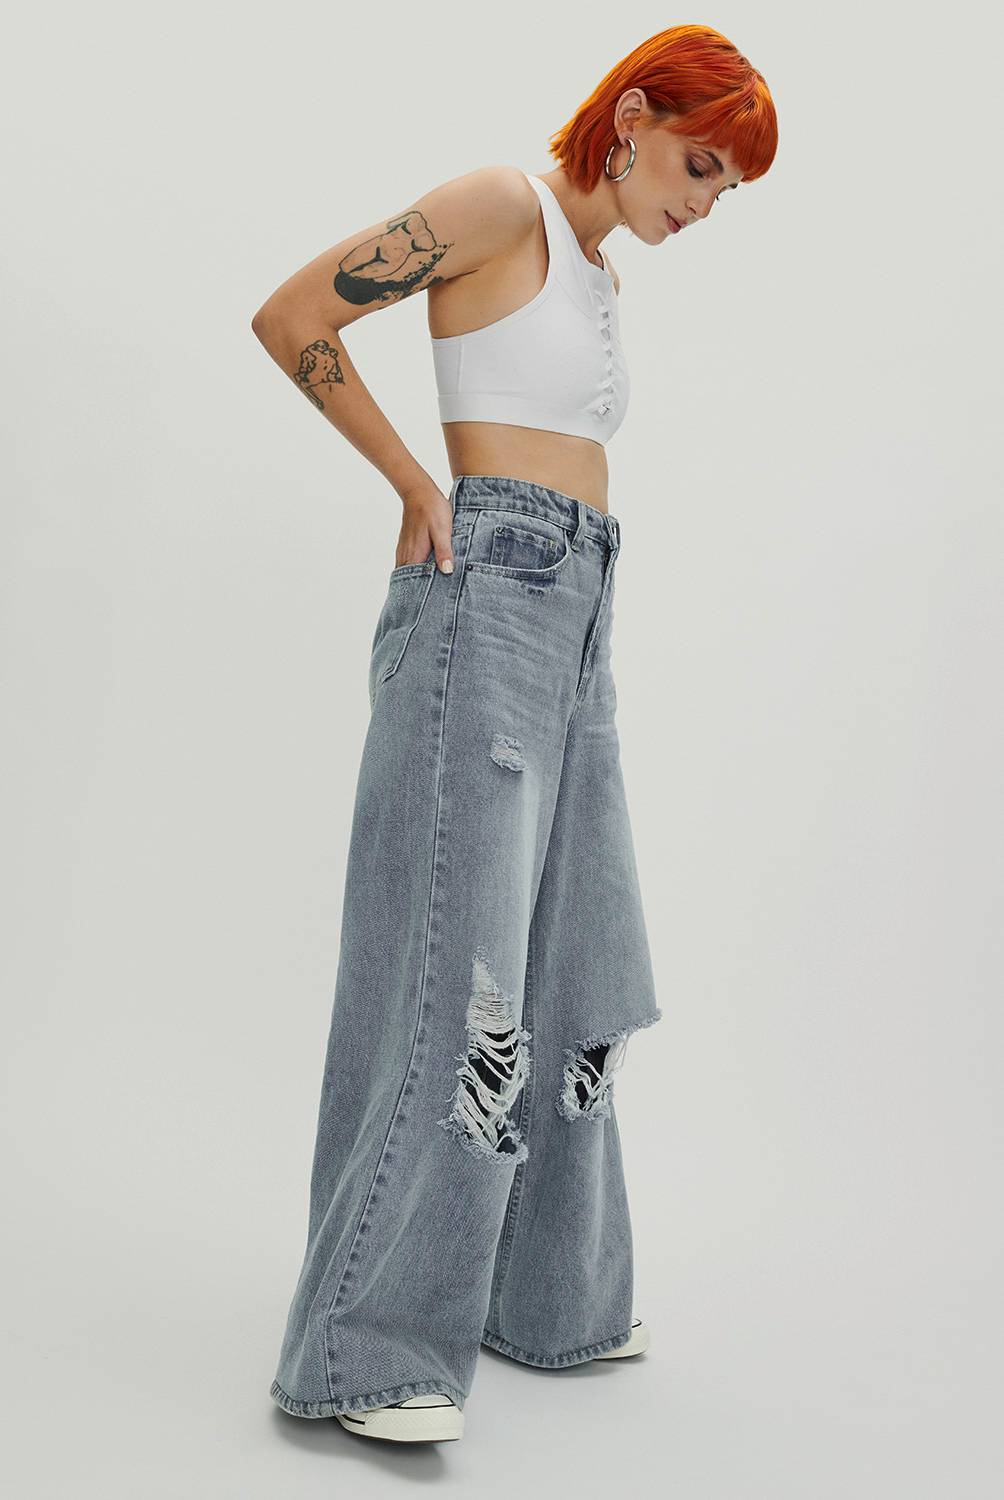 AMERICANINO - Jeans Wide Leg Tiro Alto Mujer